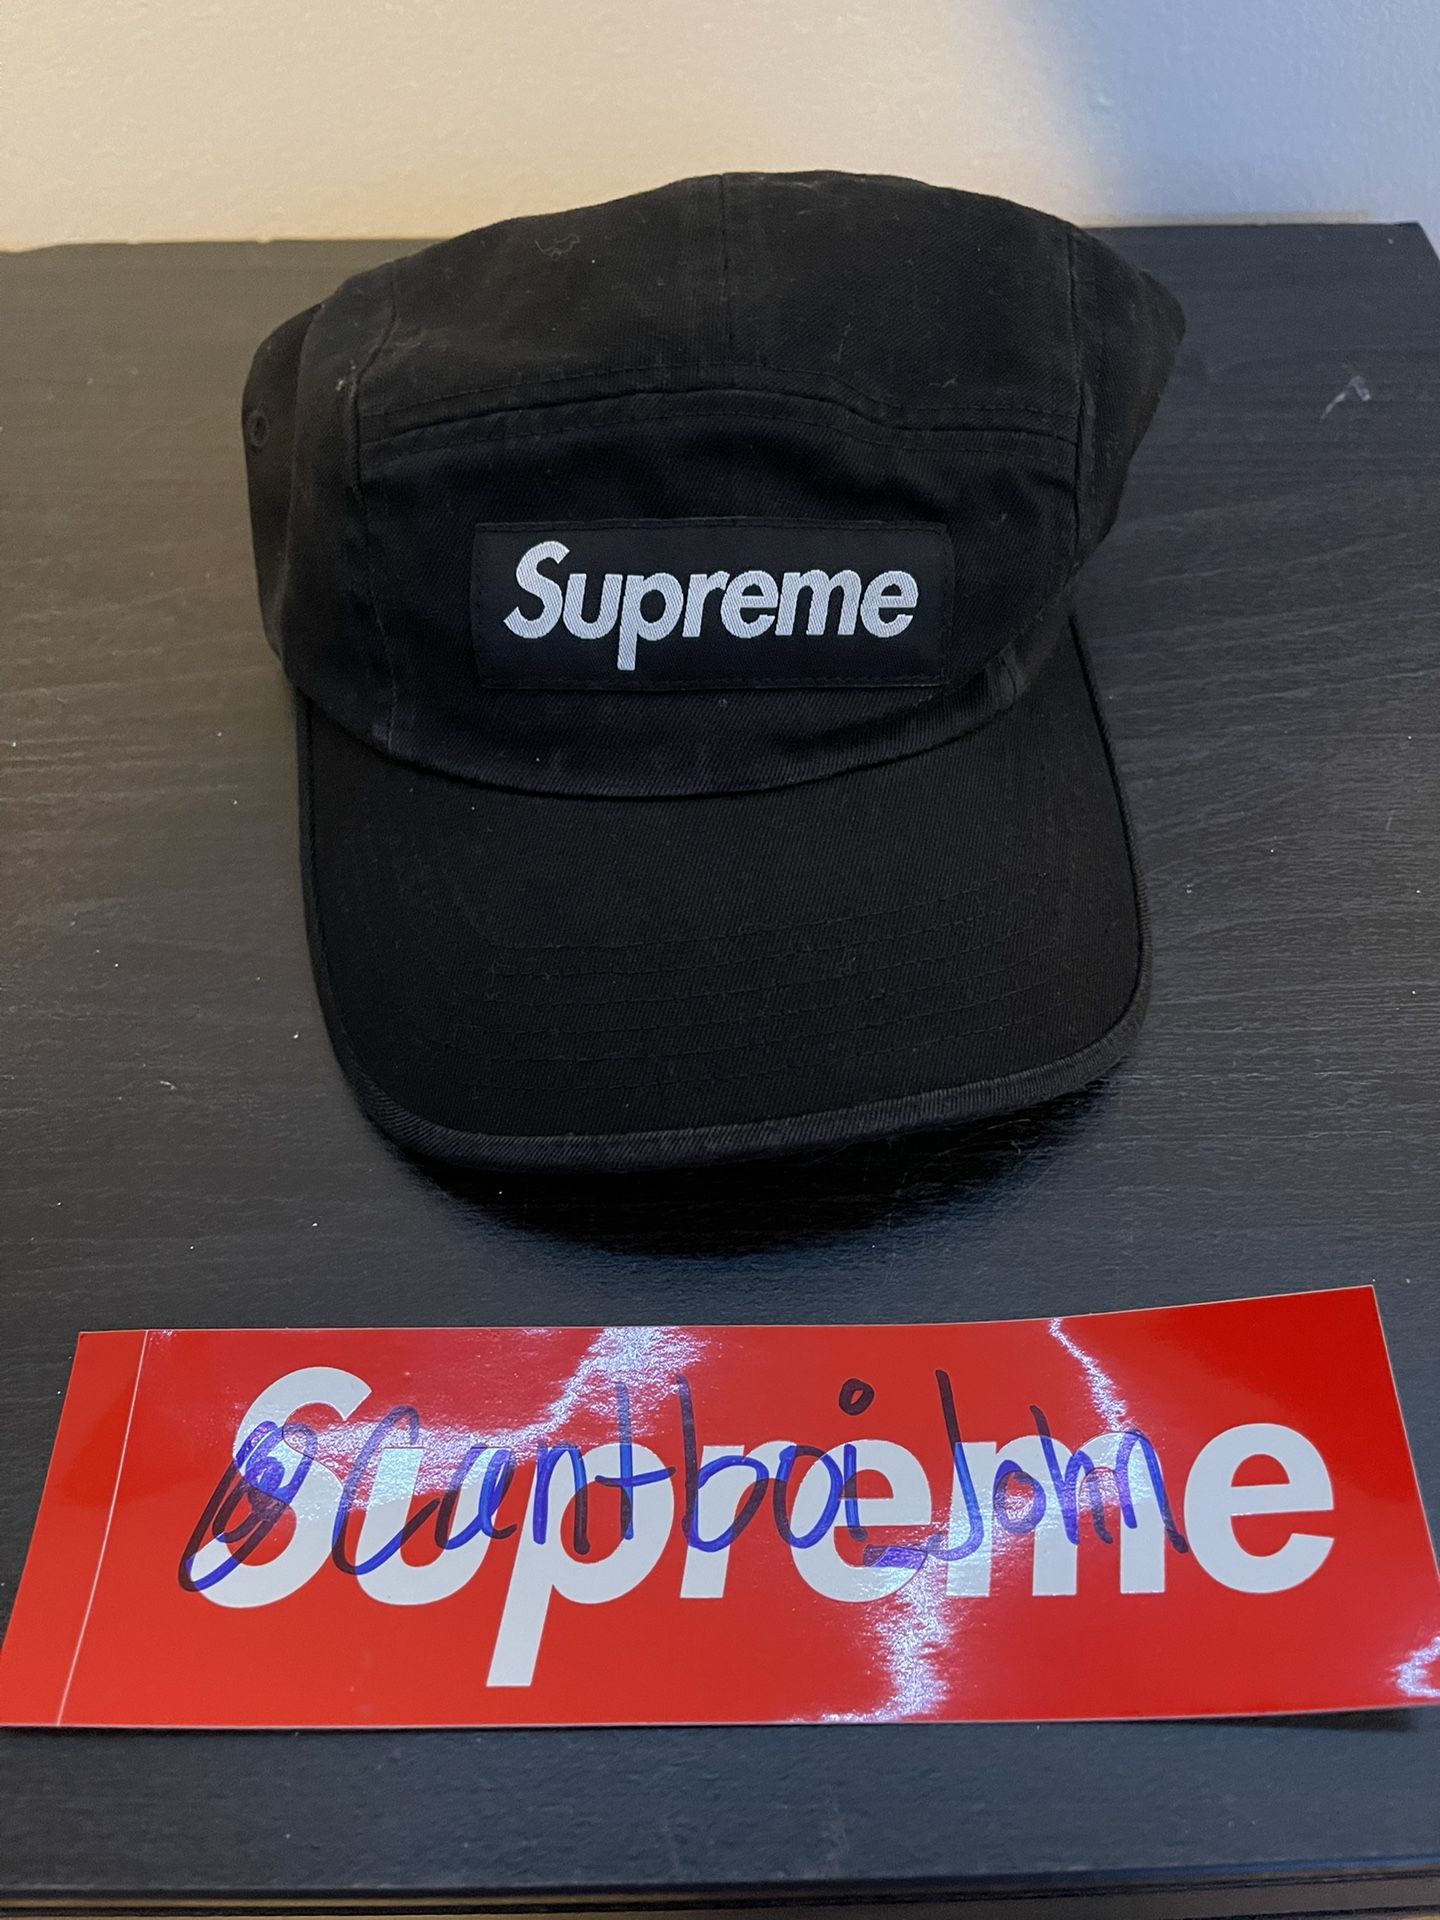 Black Supreme 5 Panel Hat